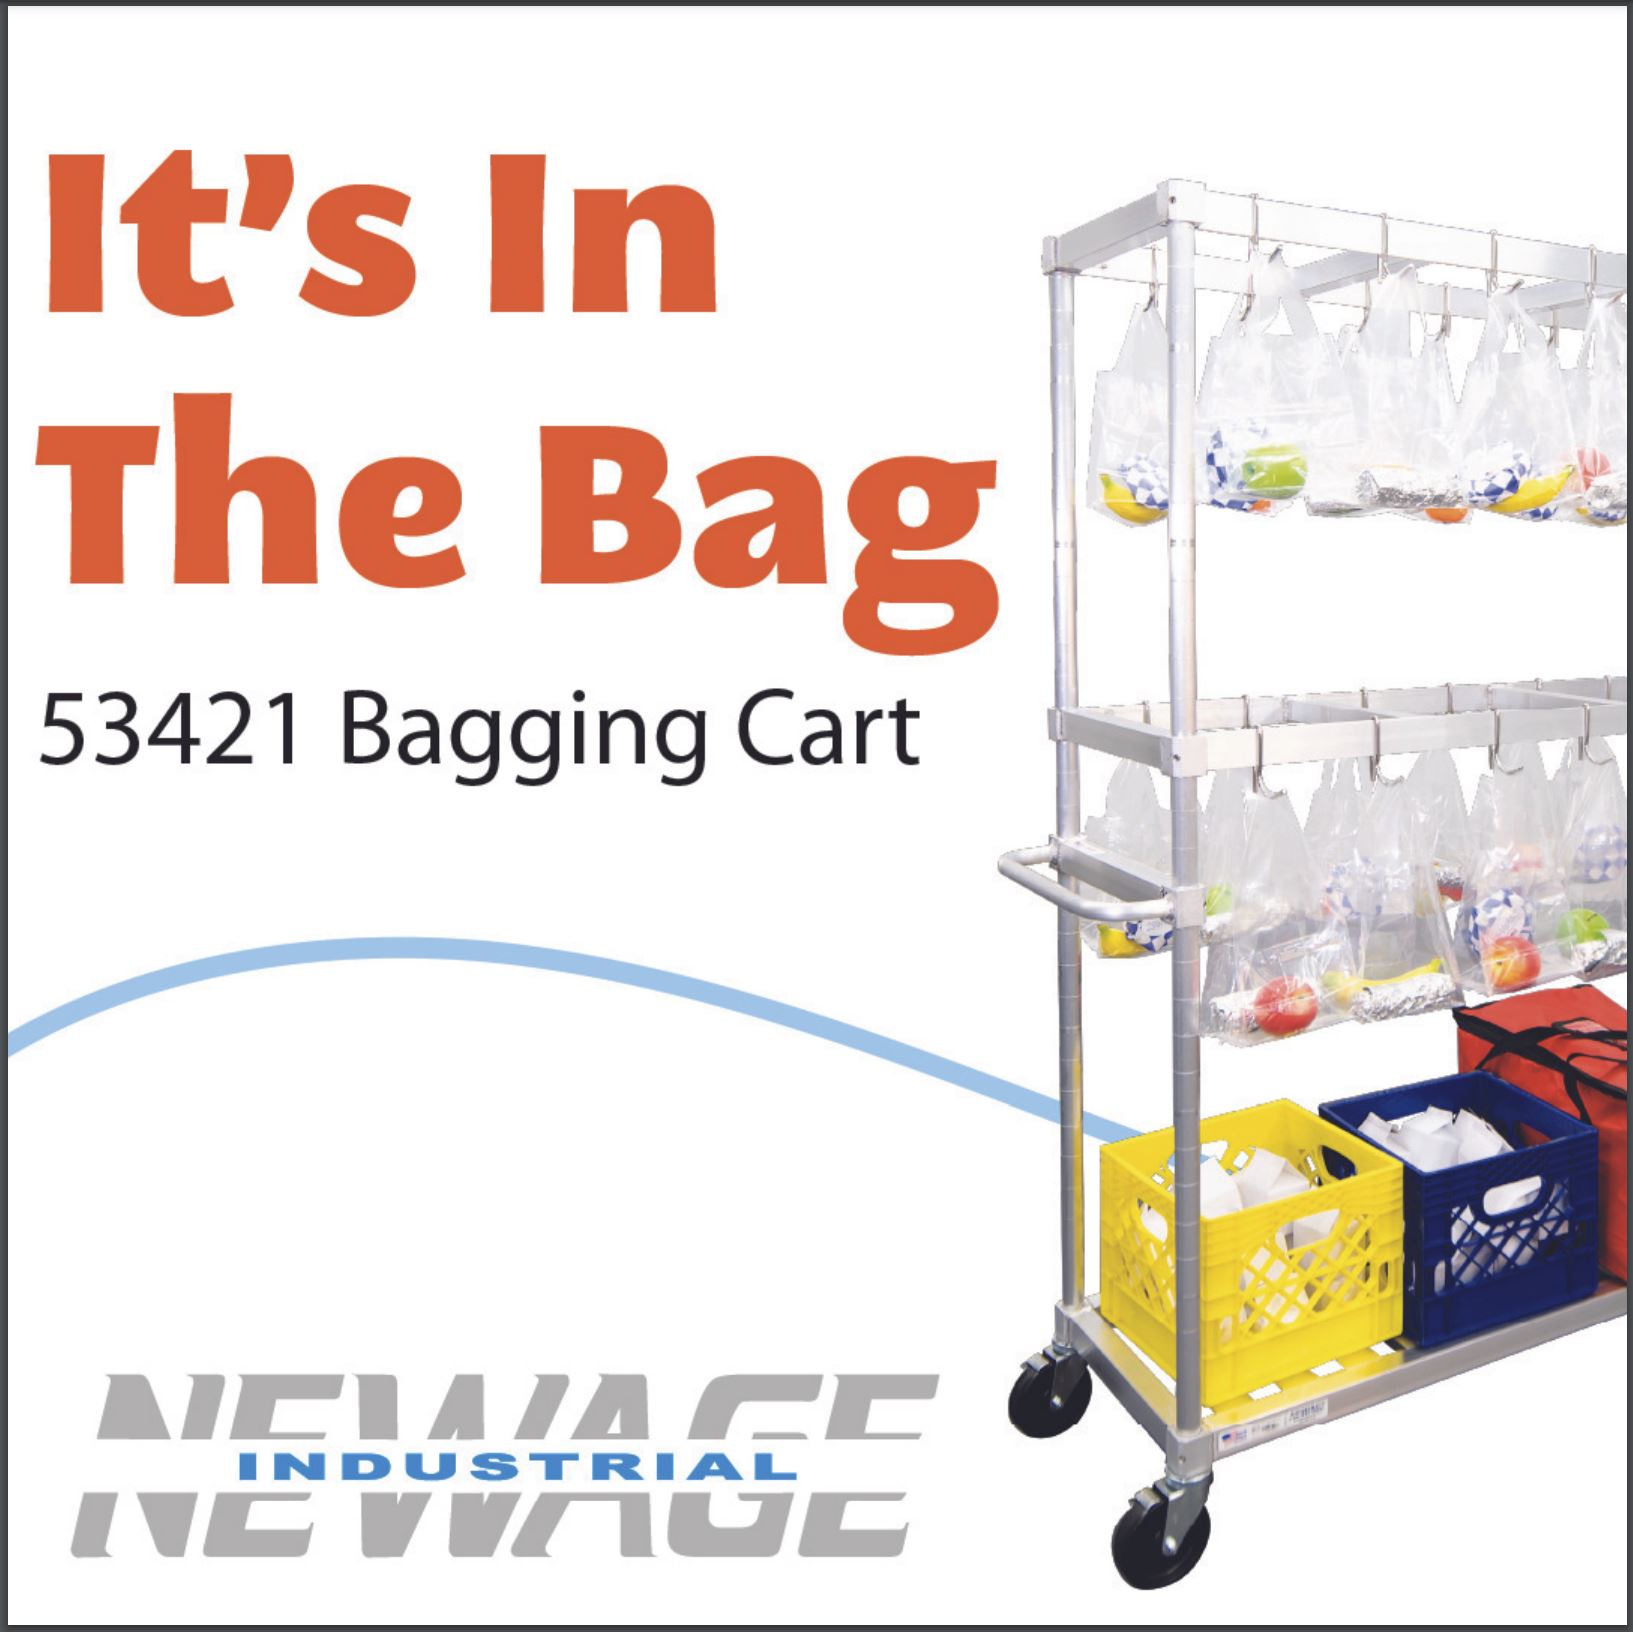 Bagging Cart Carousel Ad